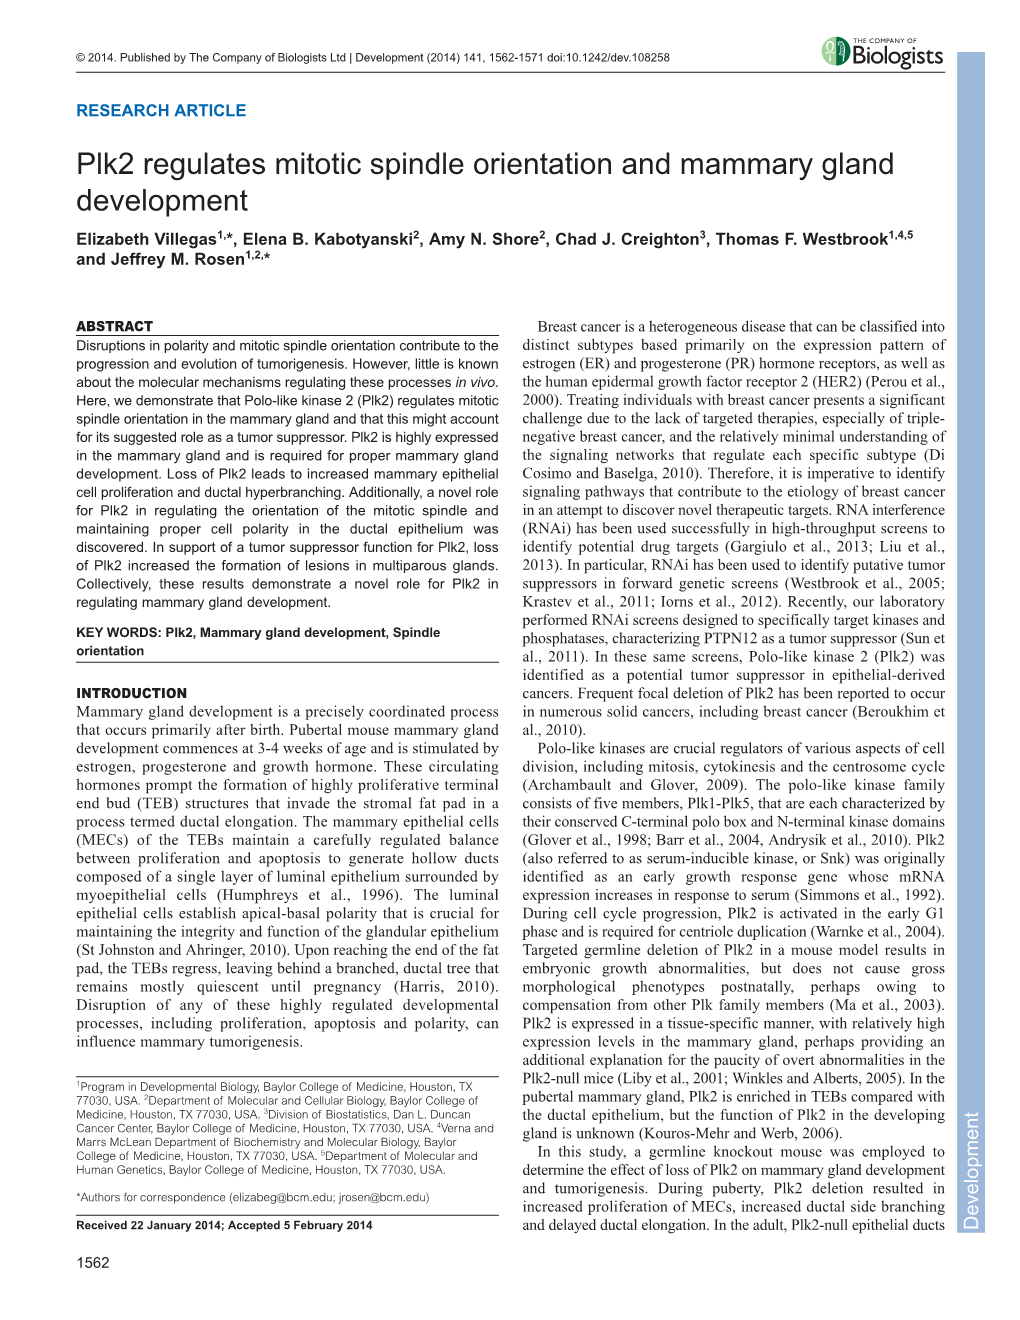 Plk2 Regulates Mitotic Spindle Orientation and Mammary Gland Development Elizabeth Villegas1,*, Elena B